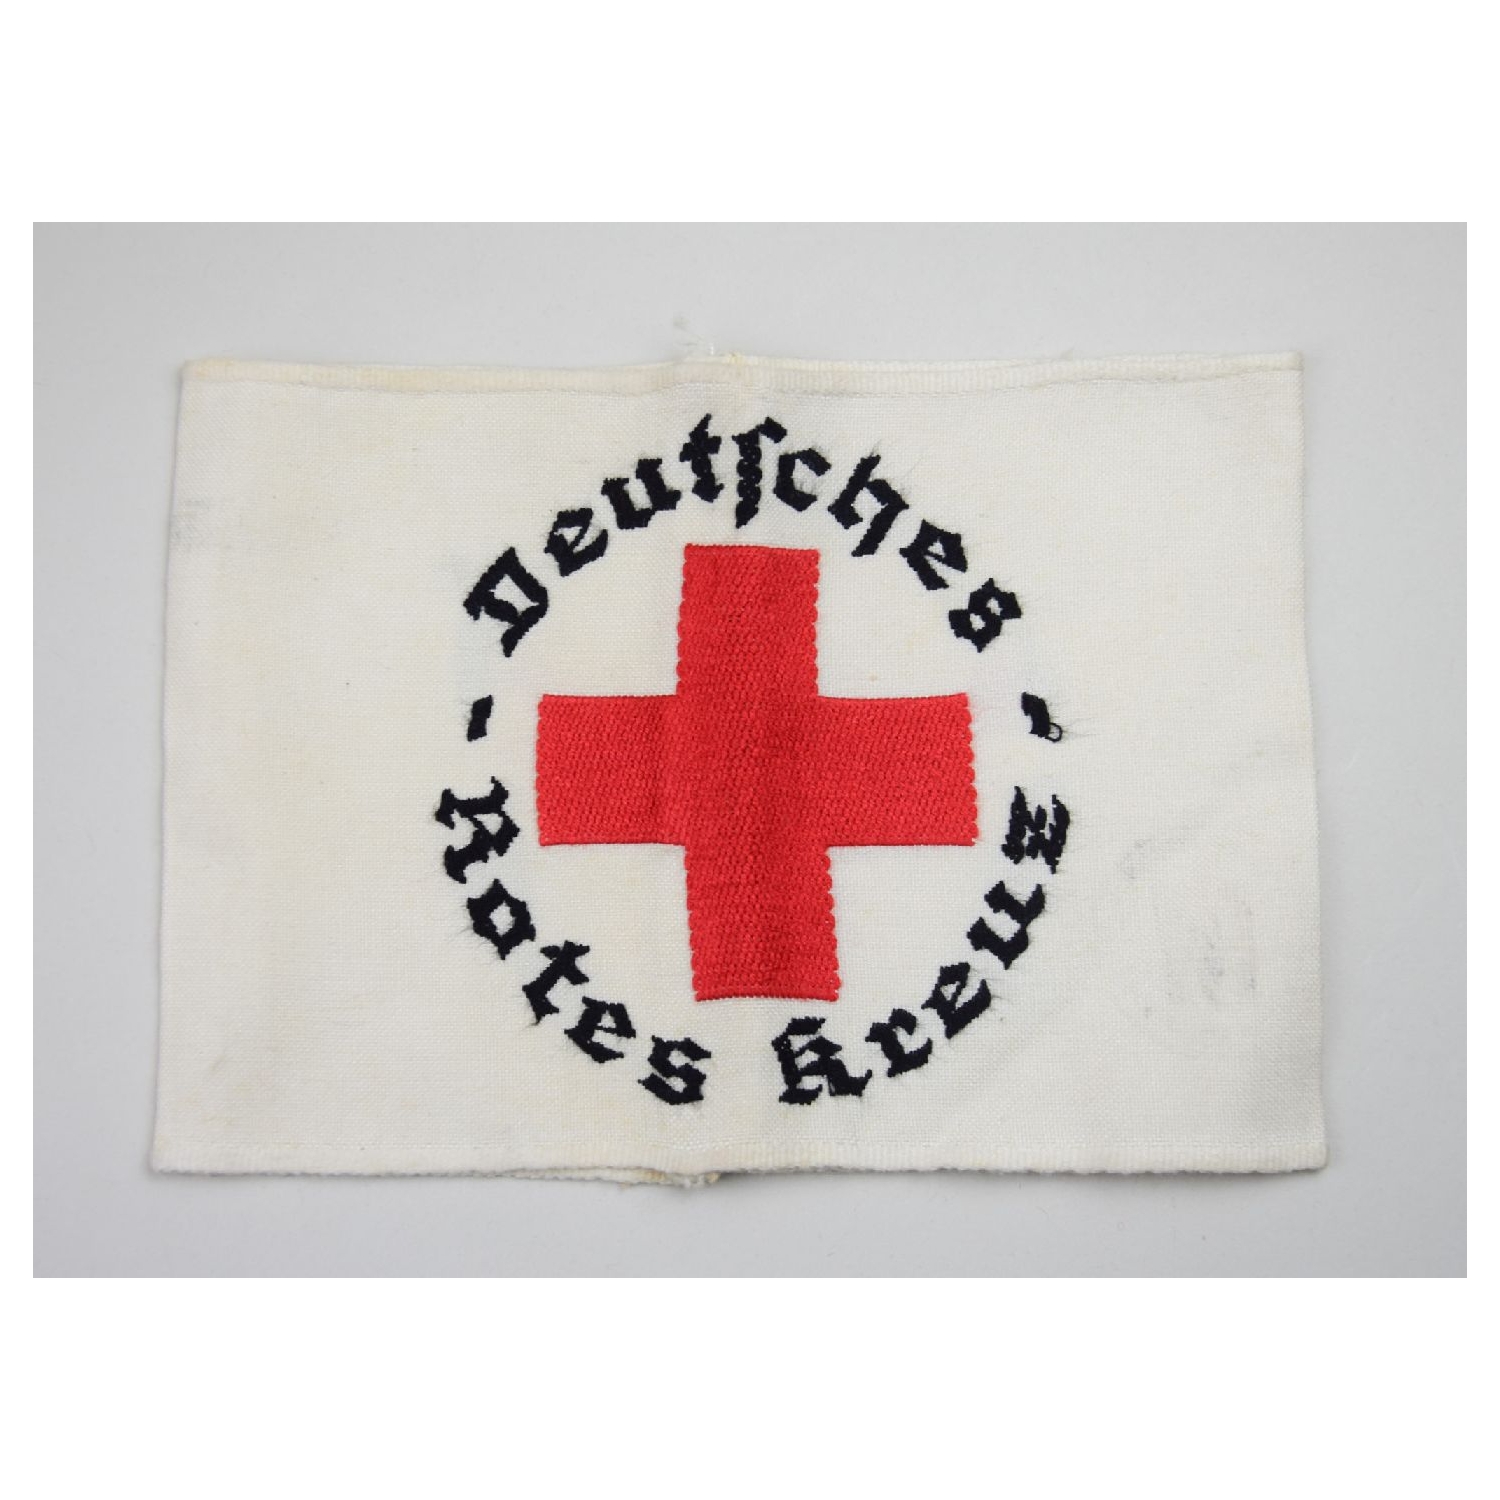 DRK Armbinde Deutsches Rotes Kreuz